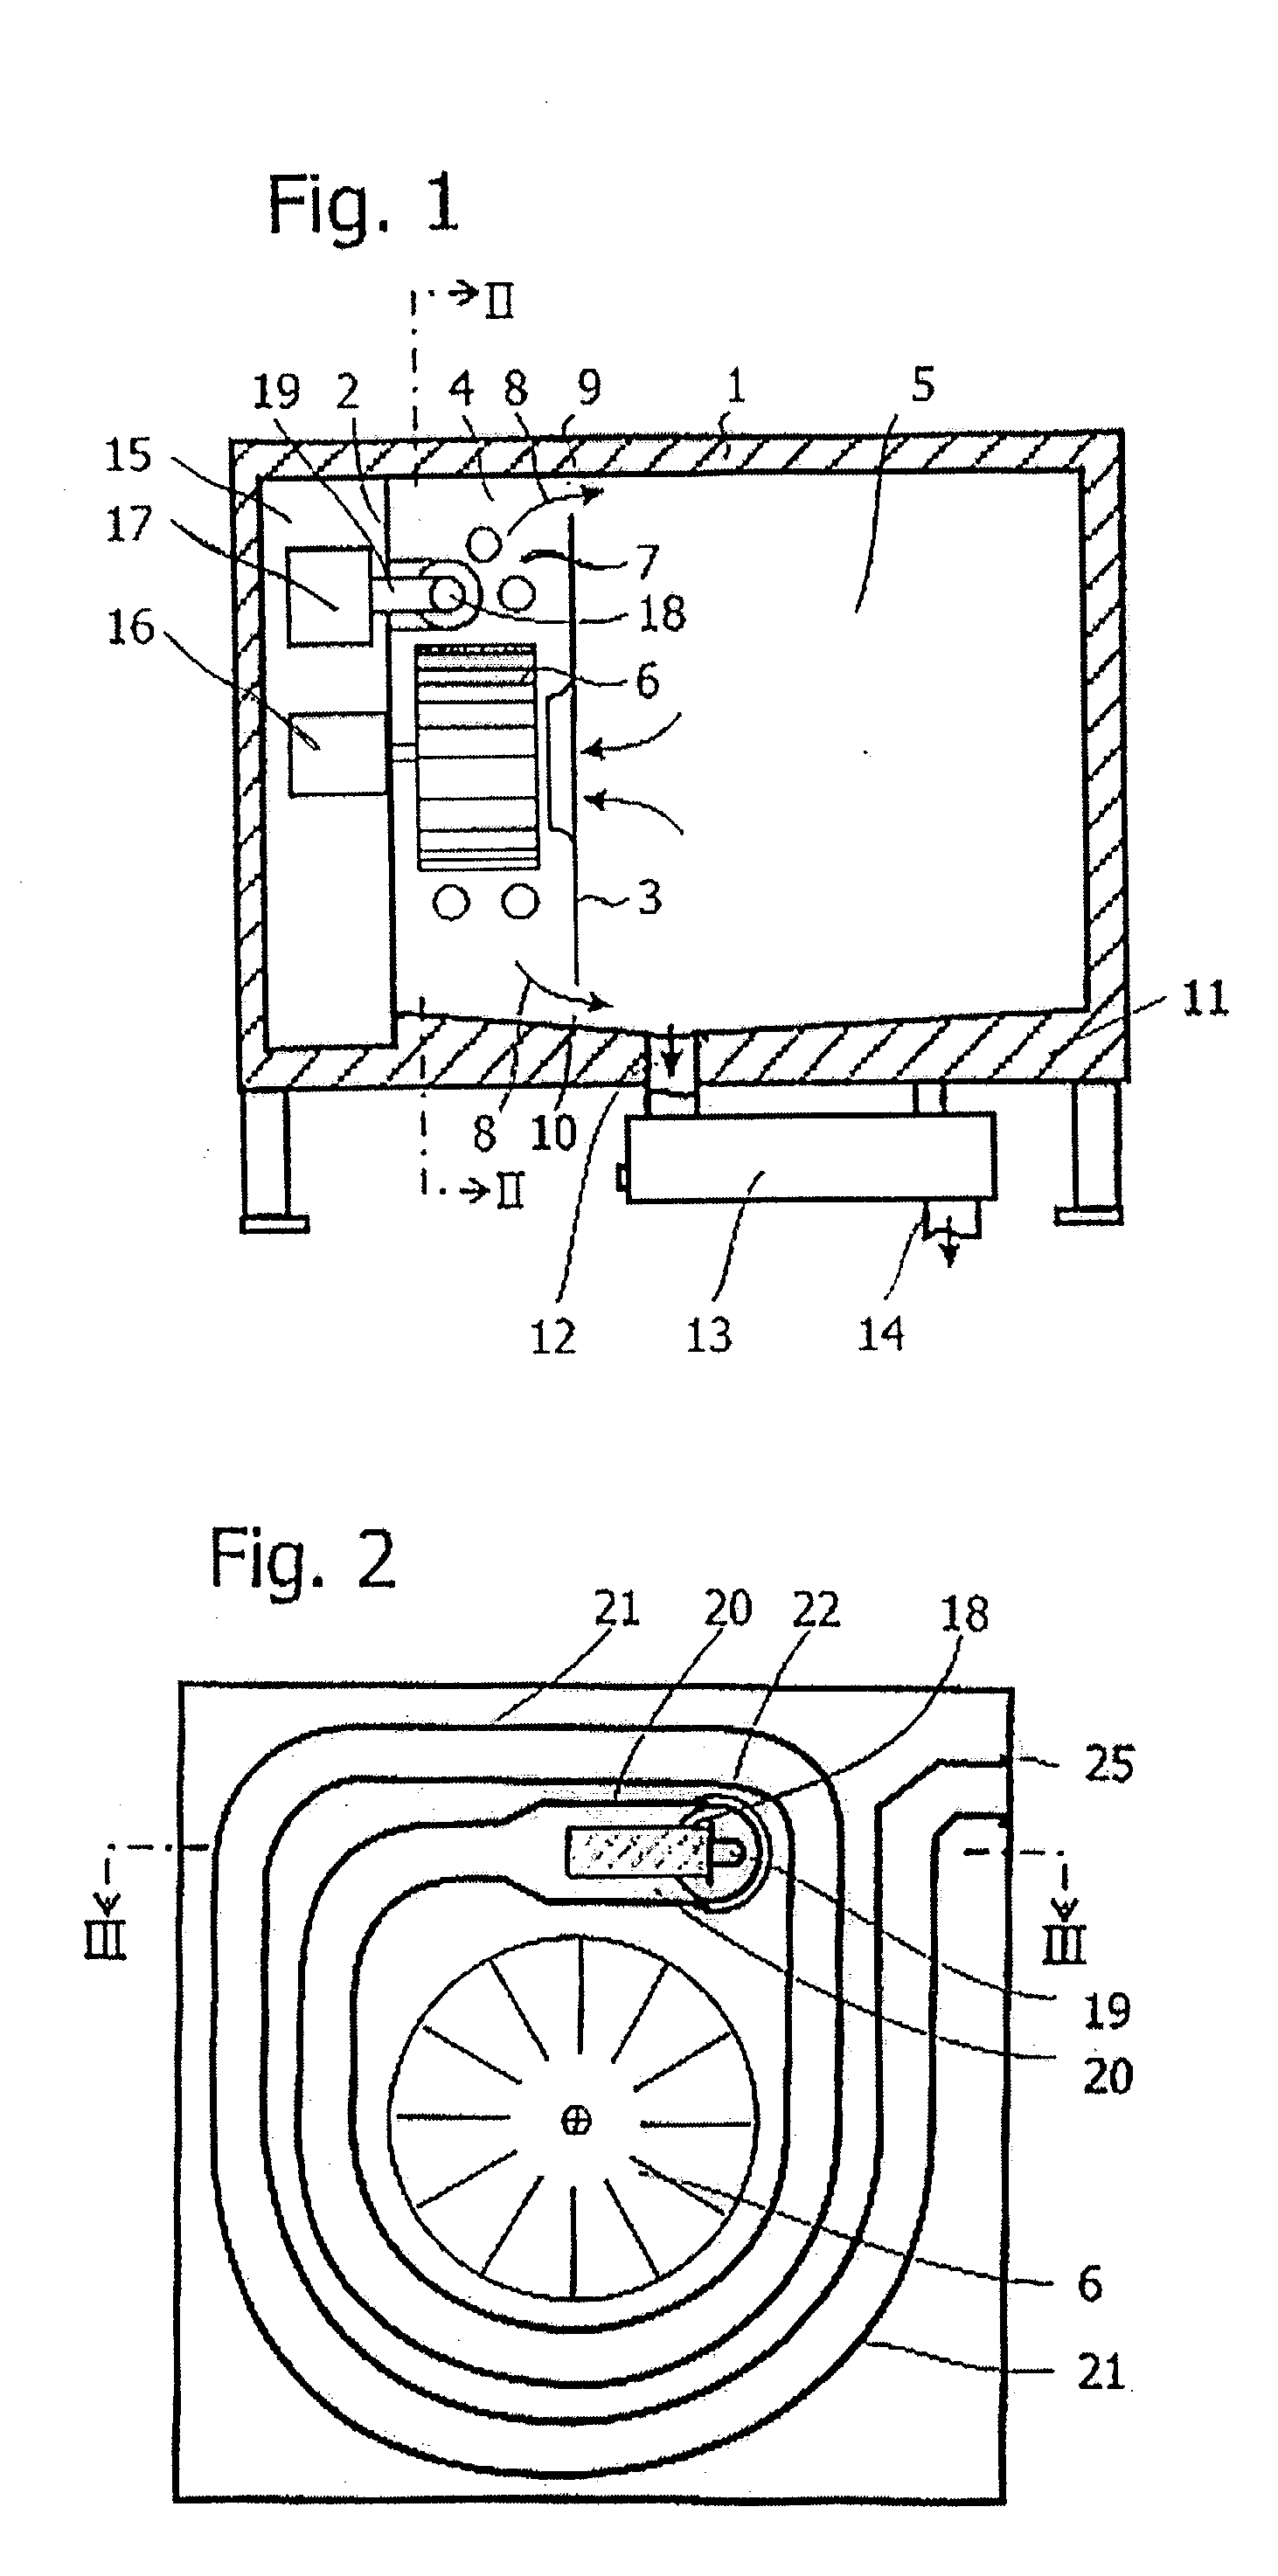 Heat exchanger device